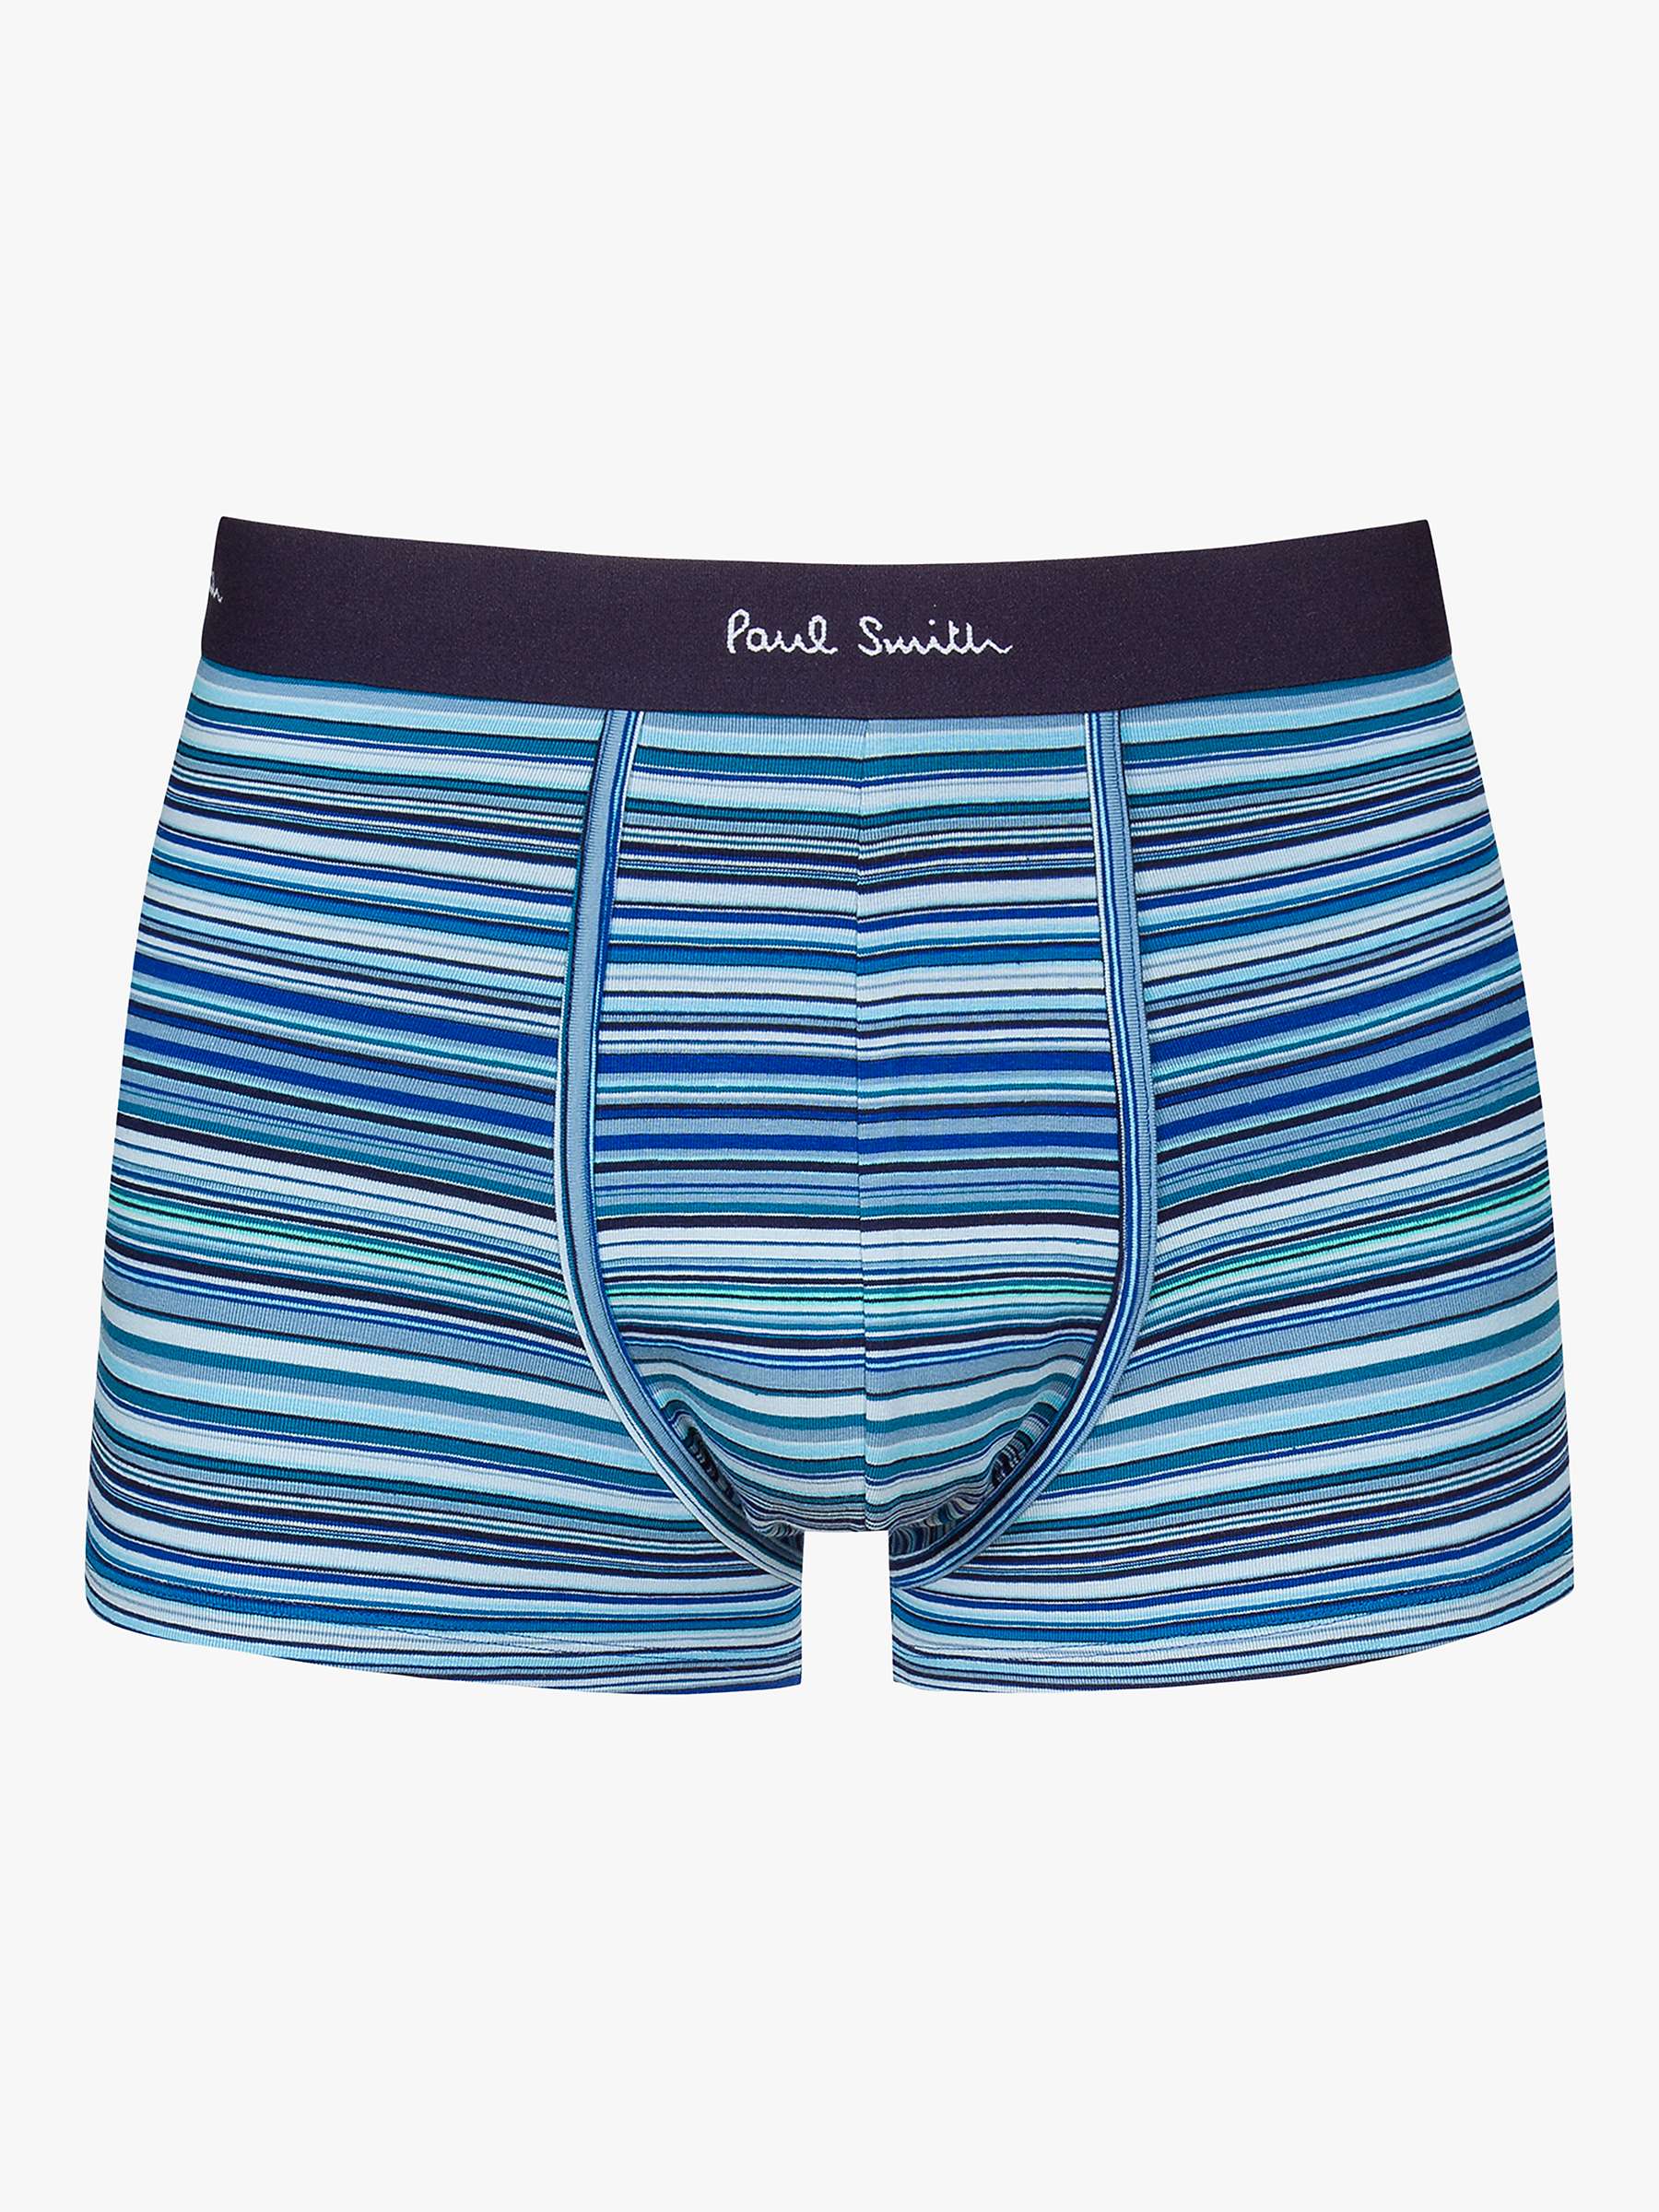 Buy Paul Smith Stripe Spot and Plain Trunks, Pack of 5, Blue/Multi Online at johnlewis.com